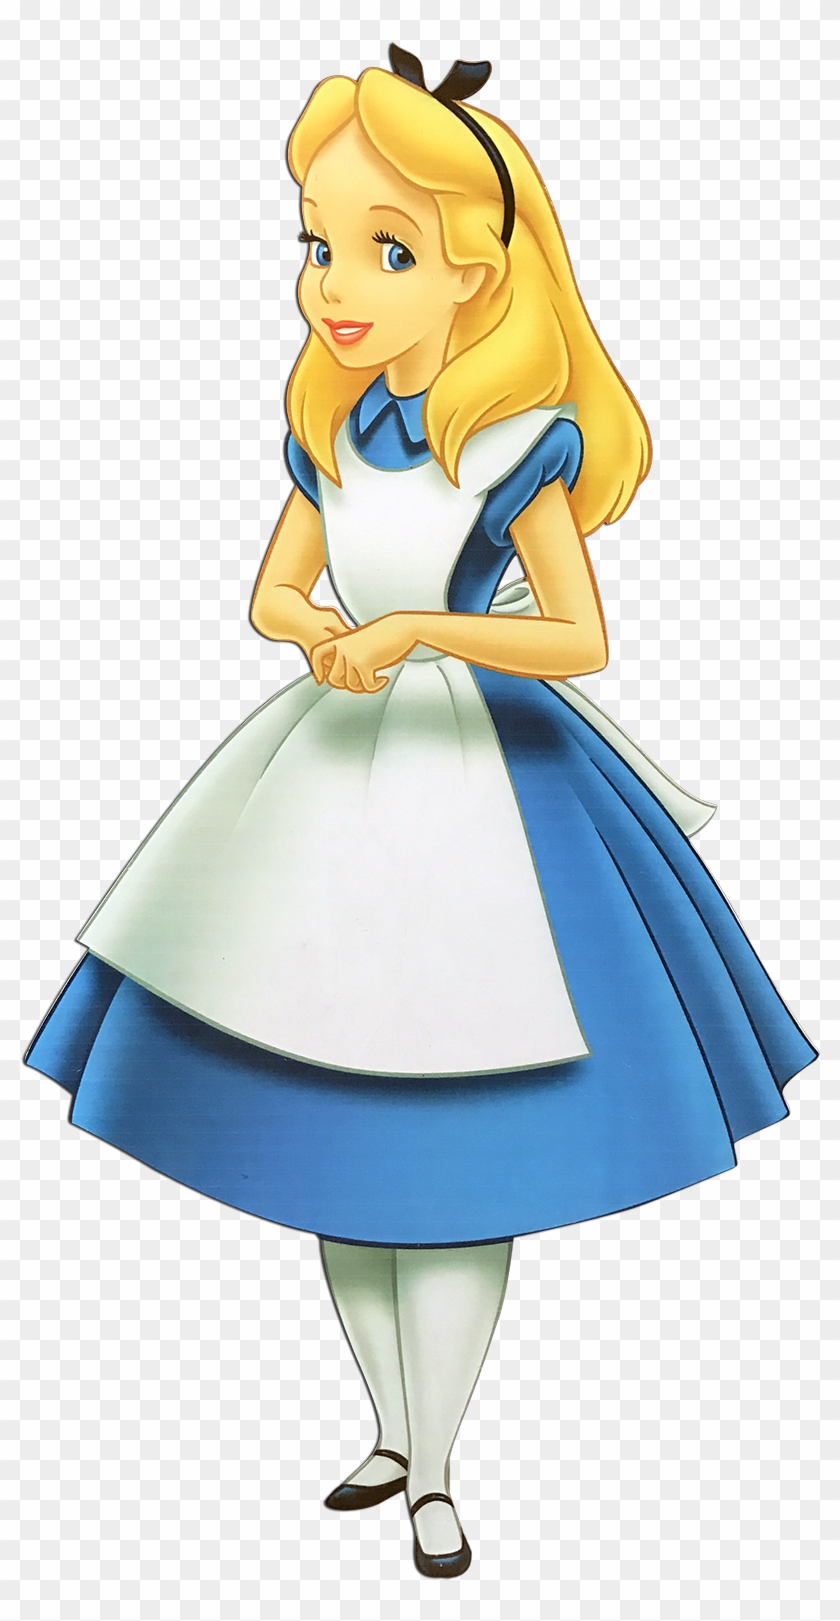 Alice Standee - Alice In Wonderland Jpg #666108